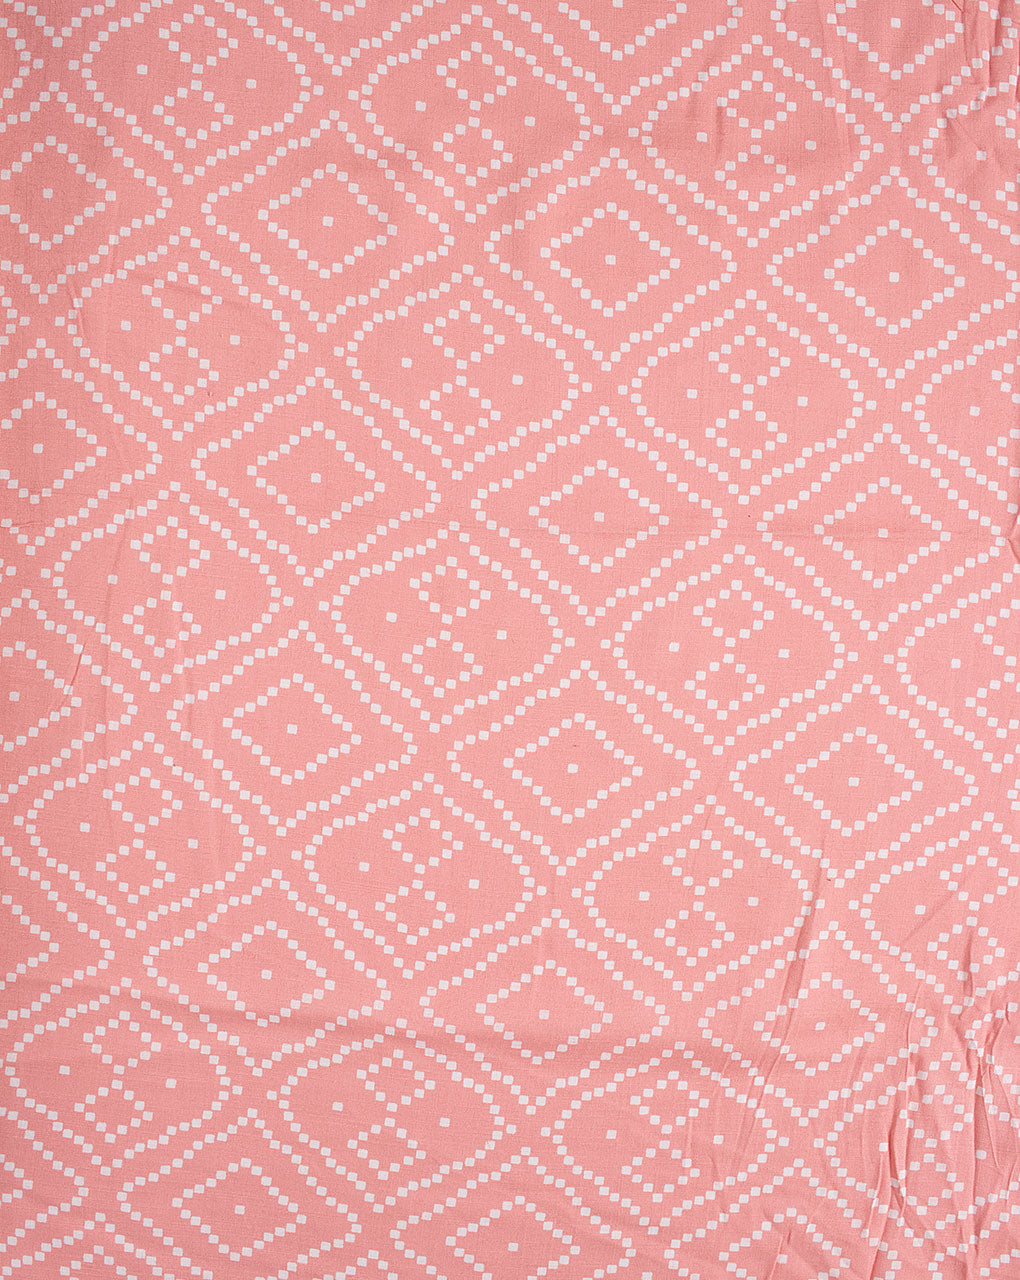 Screen Print Slub Rayon Fabric - Fabriclore.com